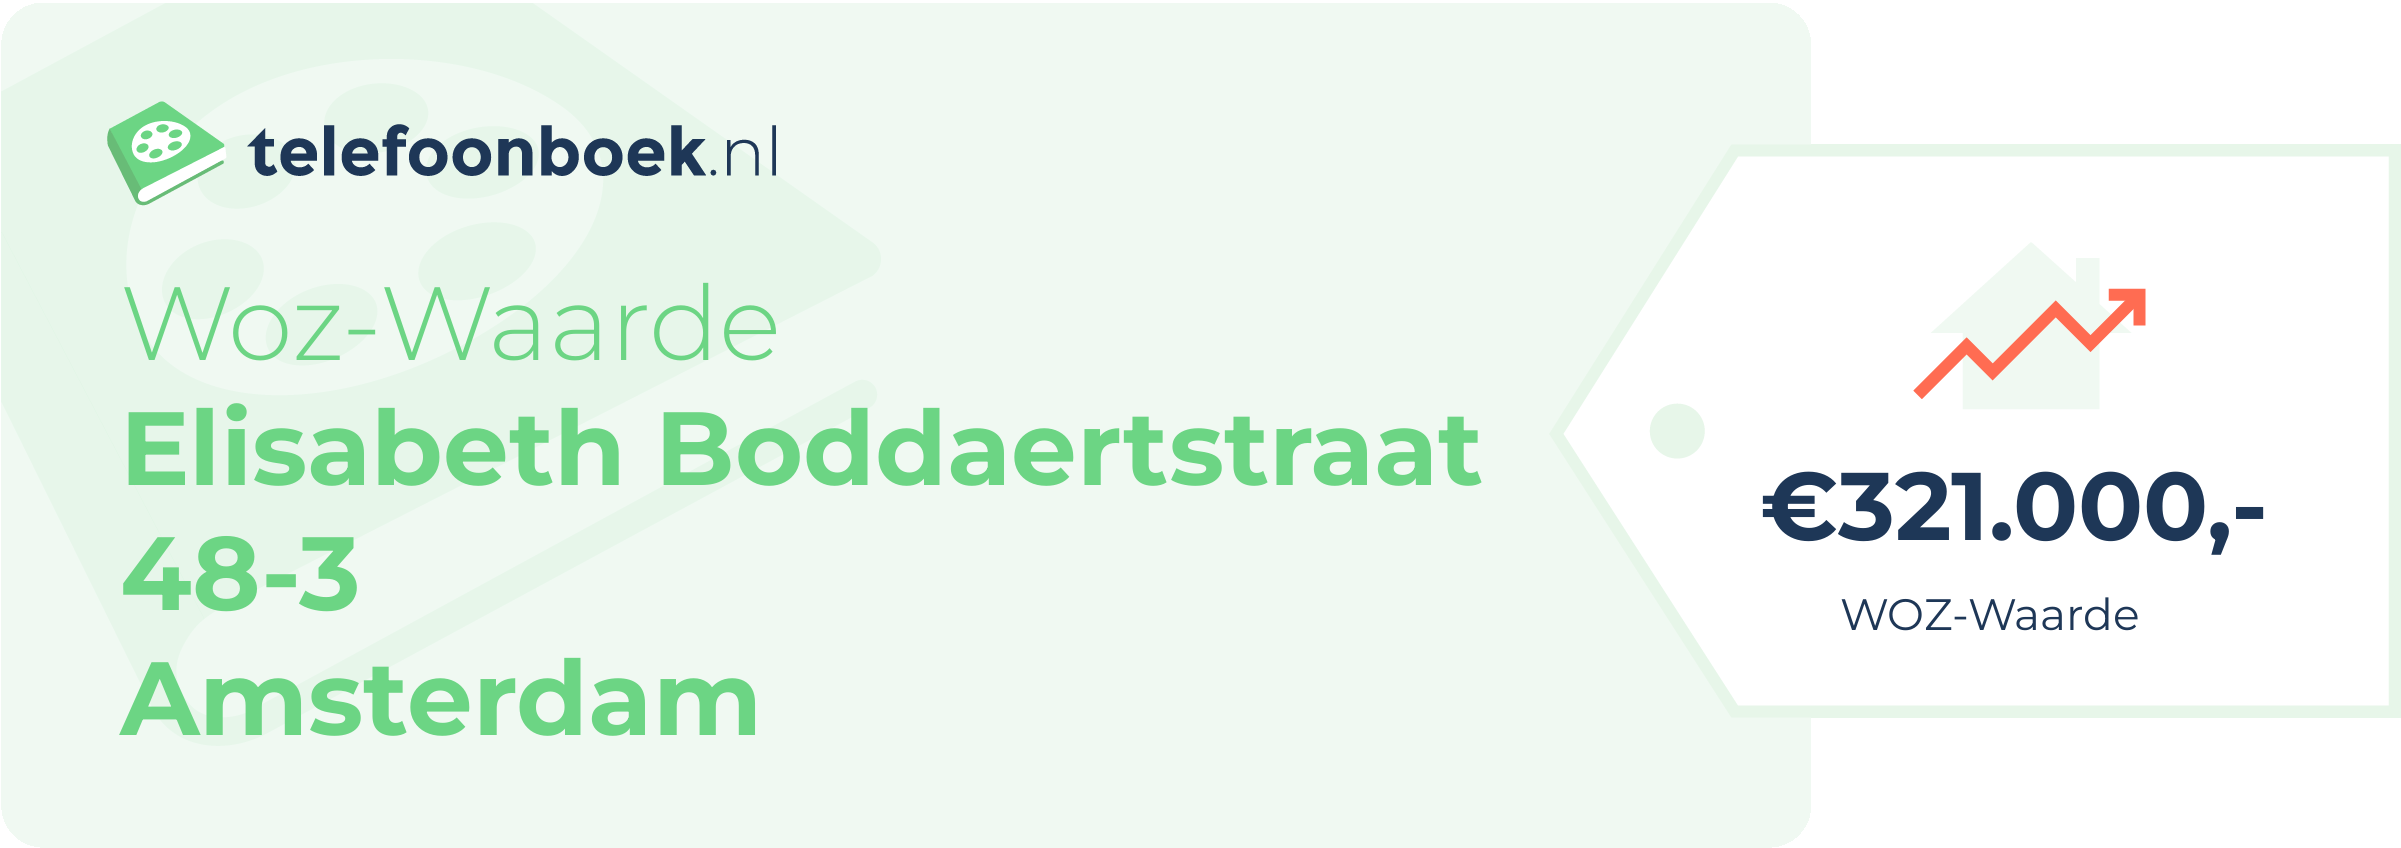 WOZ-waarde Elisabeth Boddaertstraat 48-3 Amsterdam